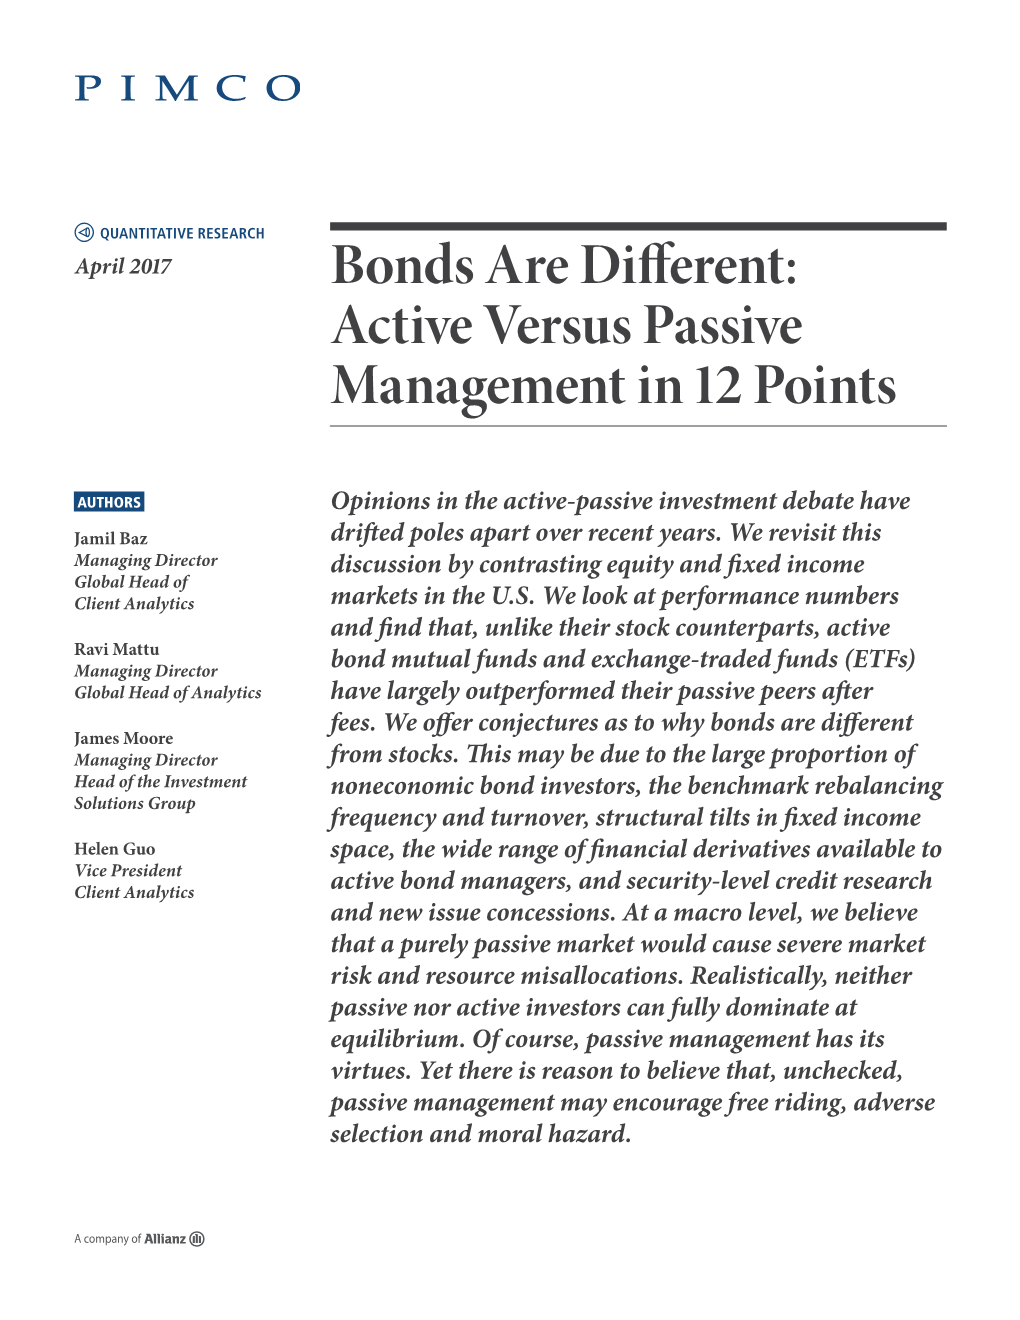 Bonds Are Different: Active Versus Passive Management in 12 Points